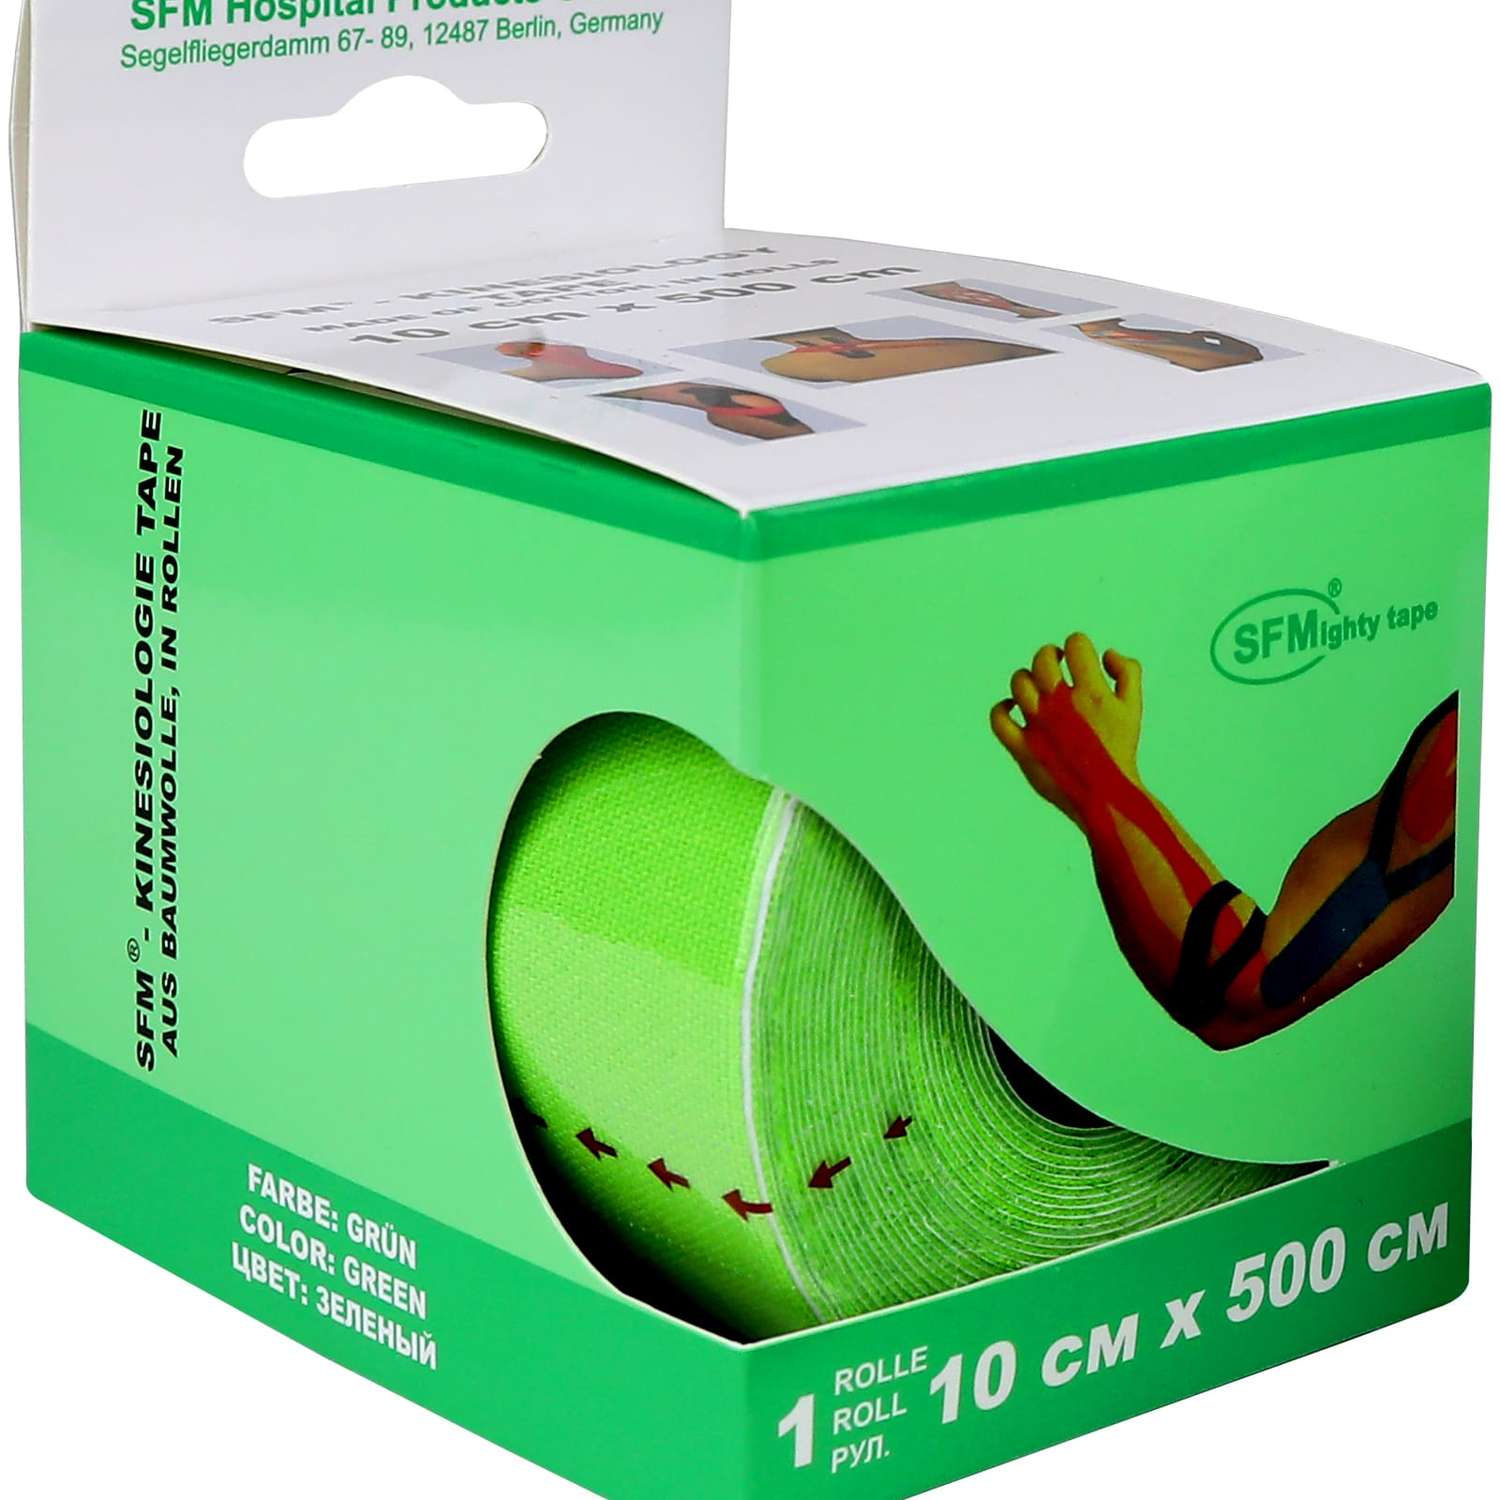 Кинезиотейп SFM Hospital Products Plaster на хлопковой основе 10х500 см зеленого цвета в диспенсере с логотипом - фото 1